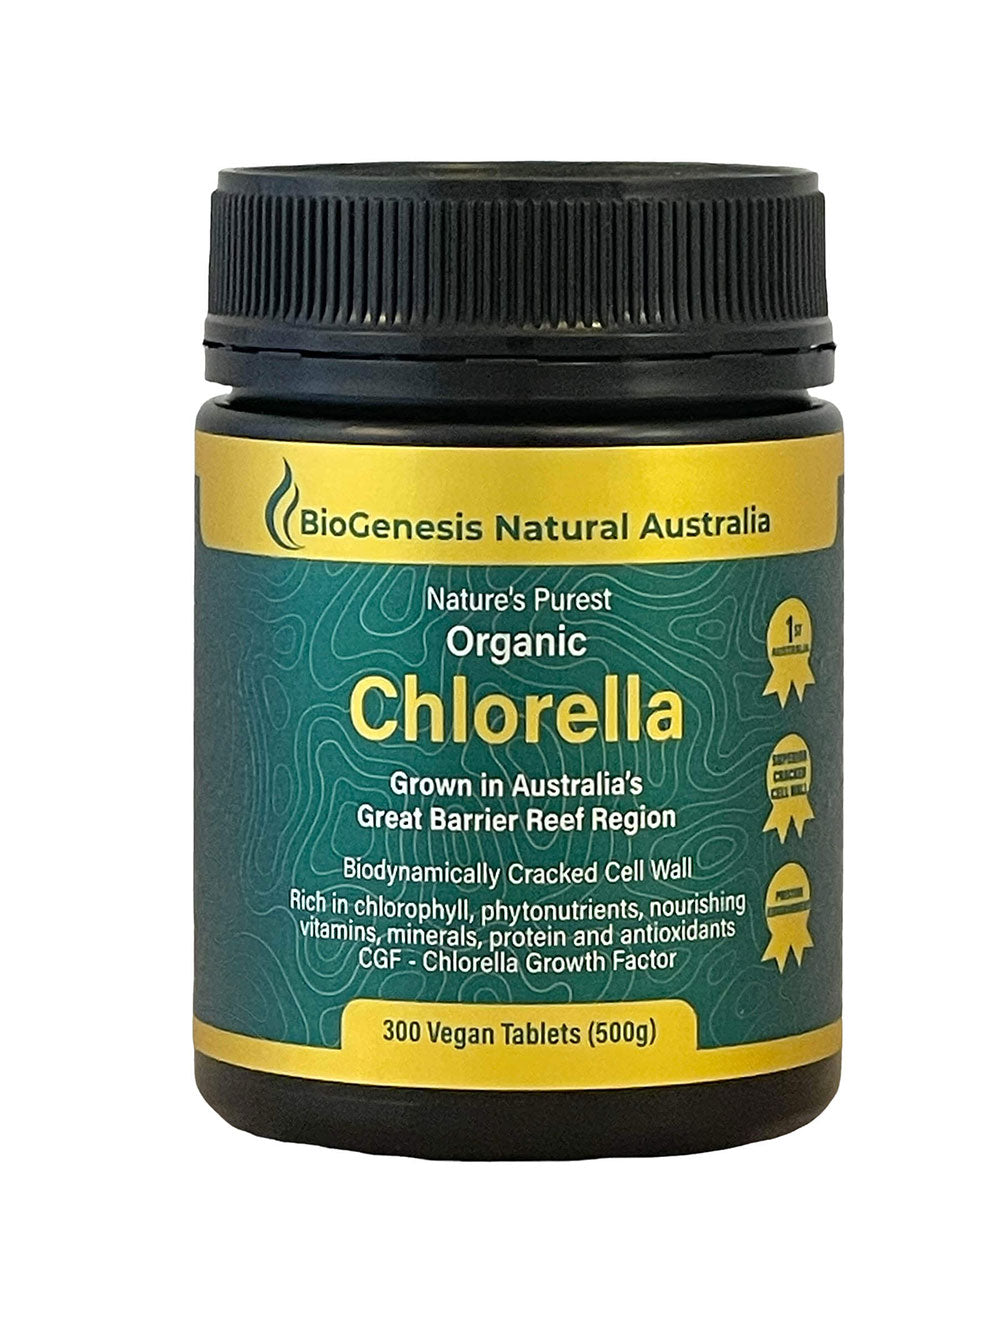 BioGenesis Natural Australia (Travel Friendly) Nature's Purest Organic Chlorella